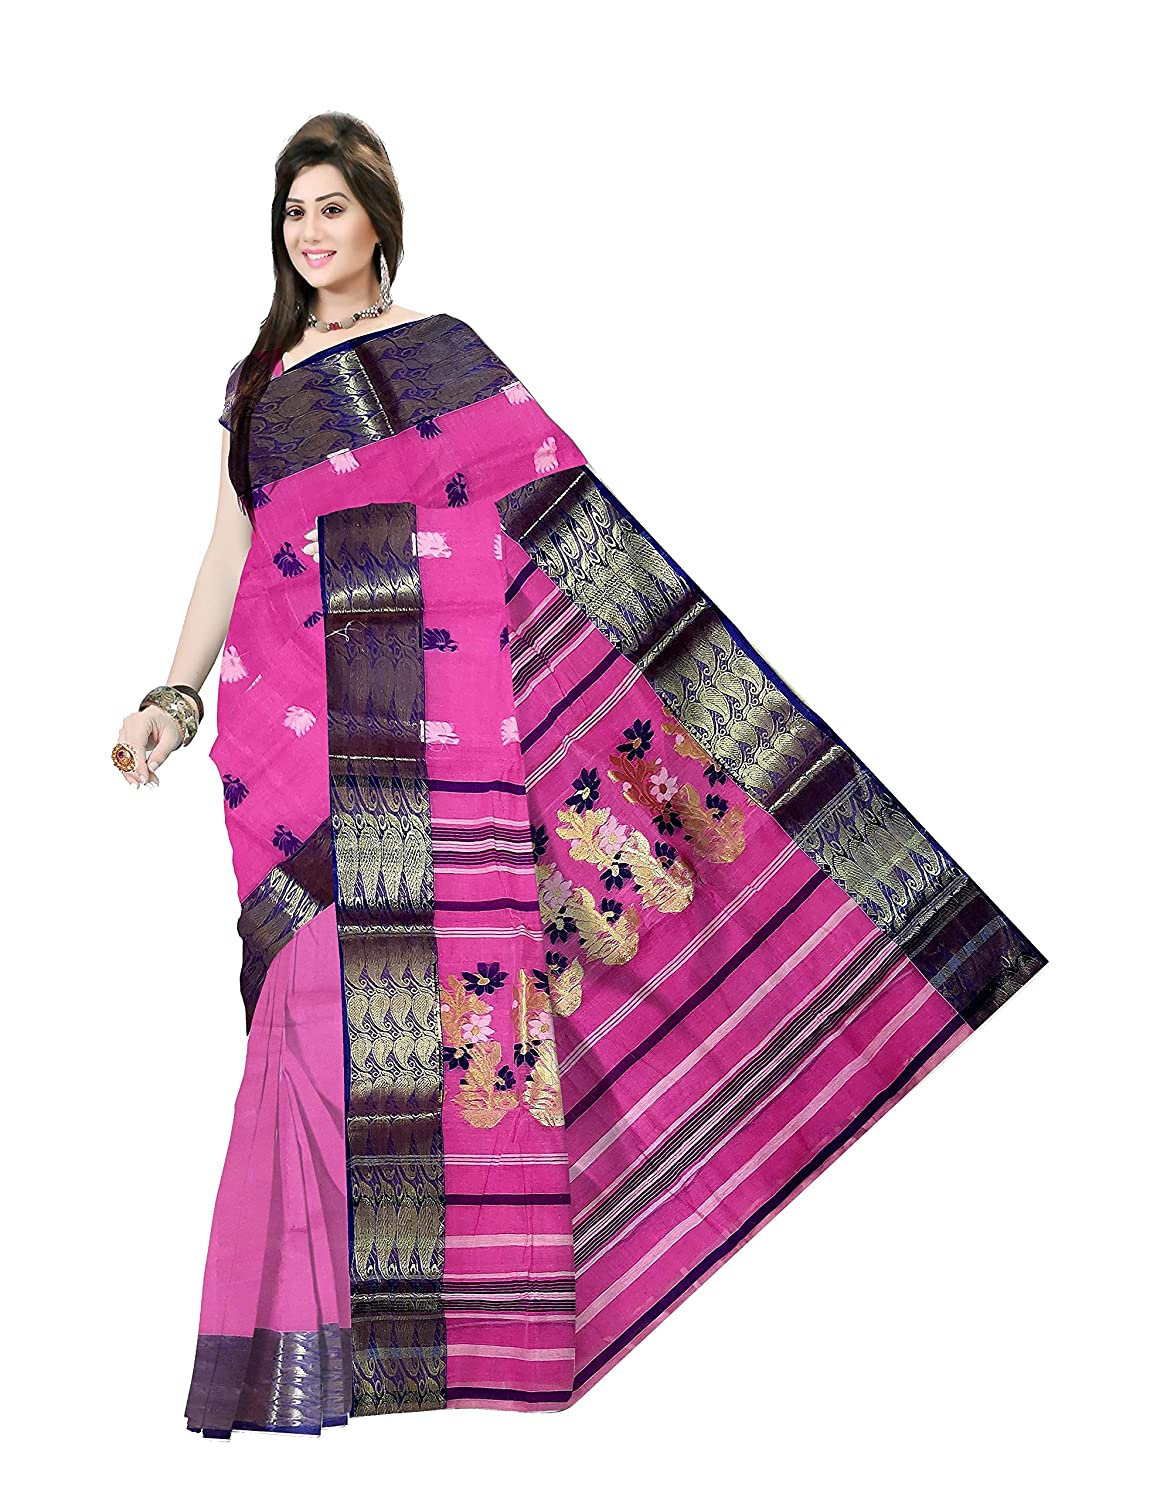 Pradip Fabrics Ethnic Women's Tant Cotton 2,000.00Pink Color Saree